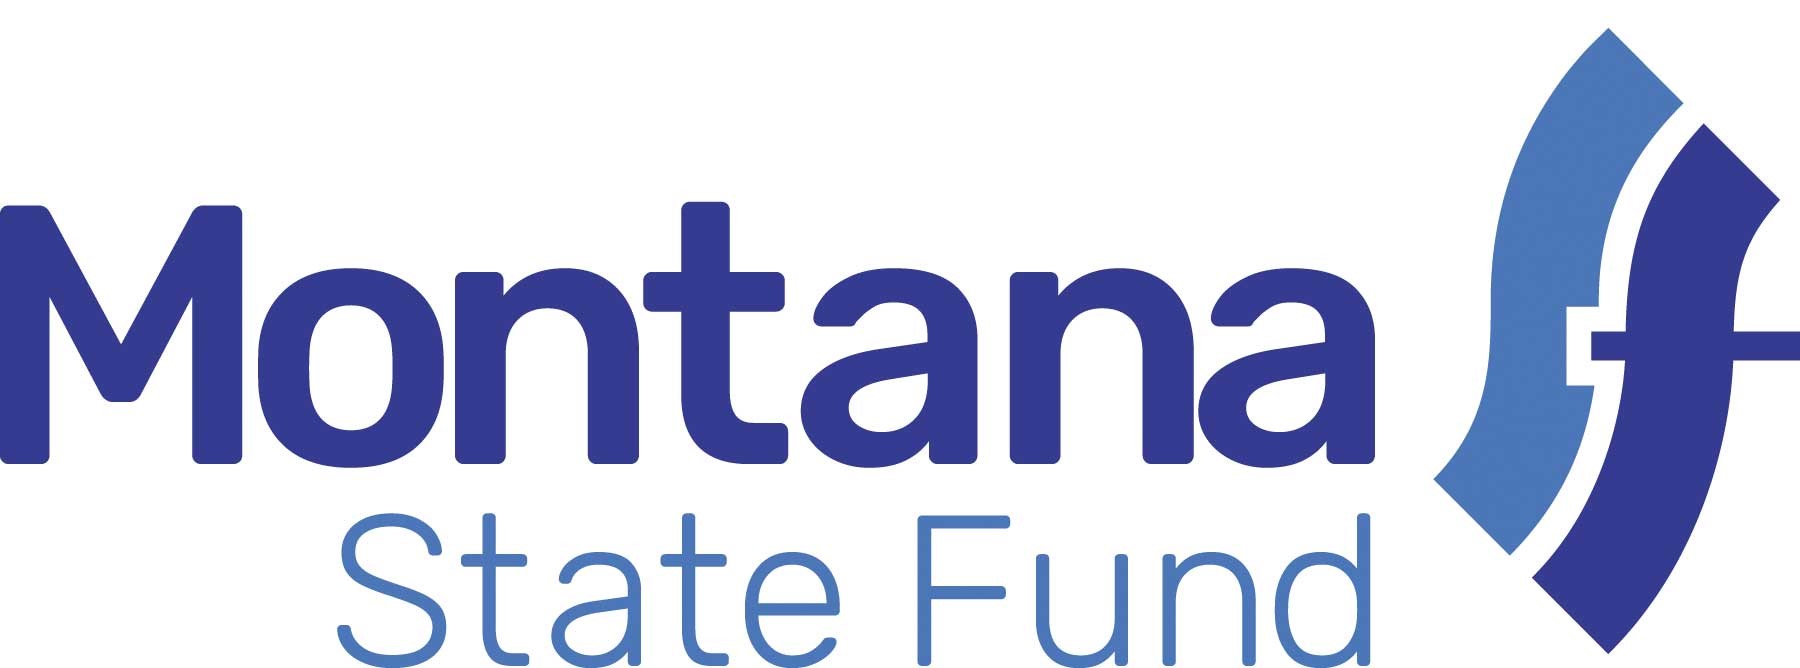 Montana State Fund Logo